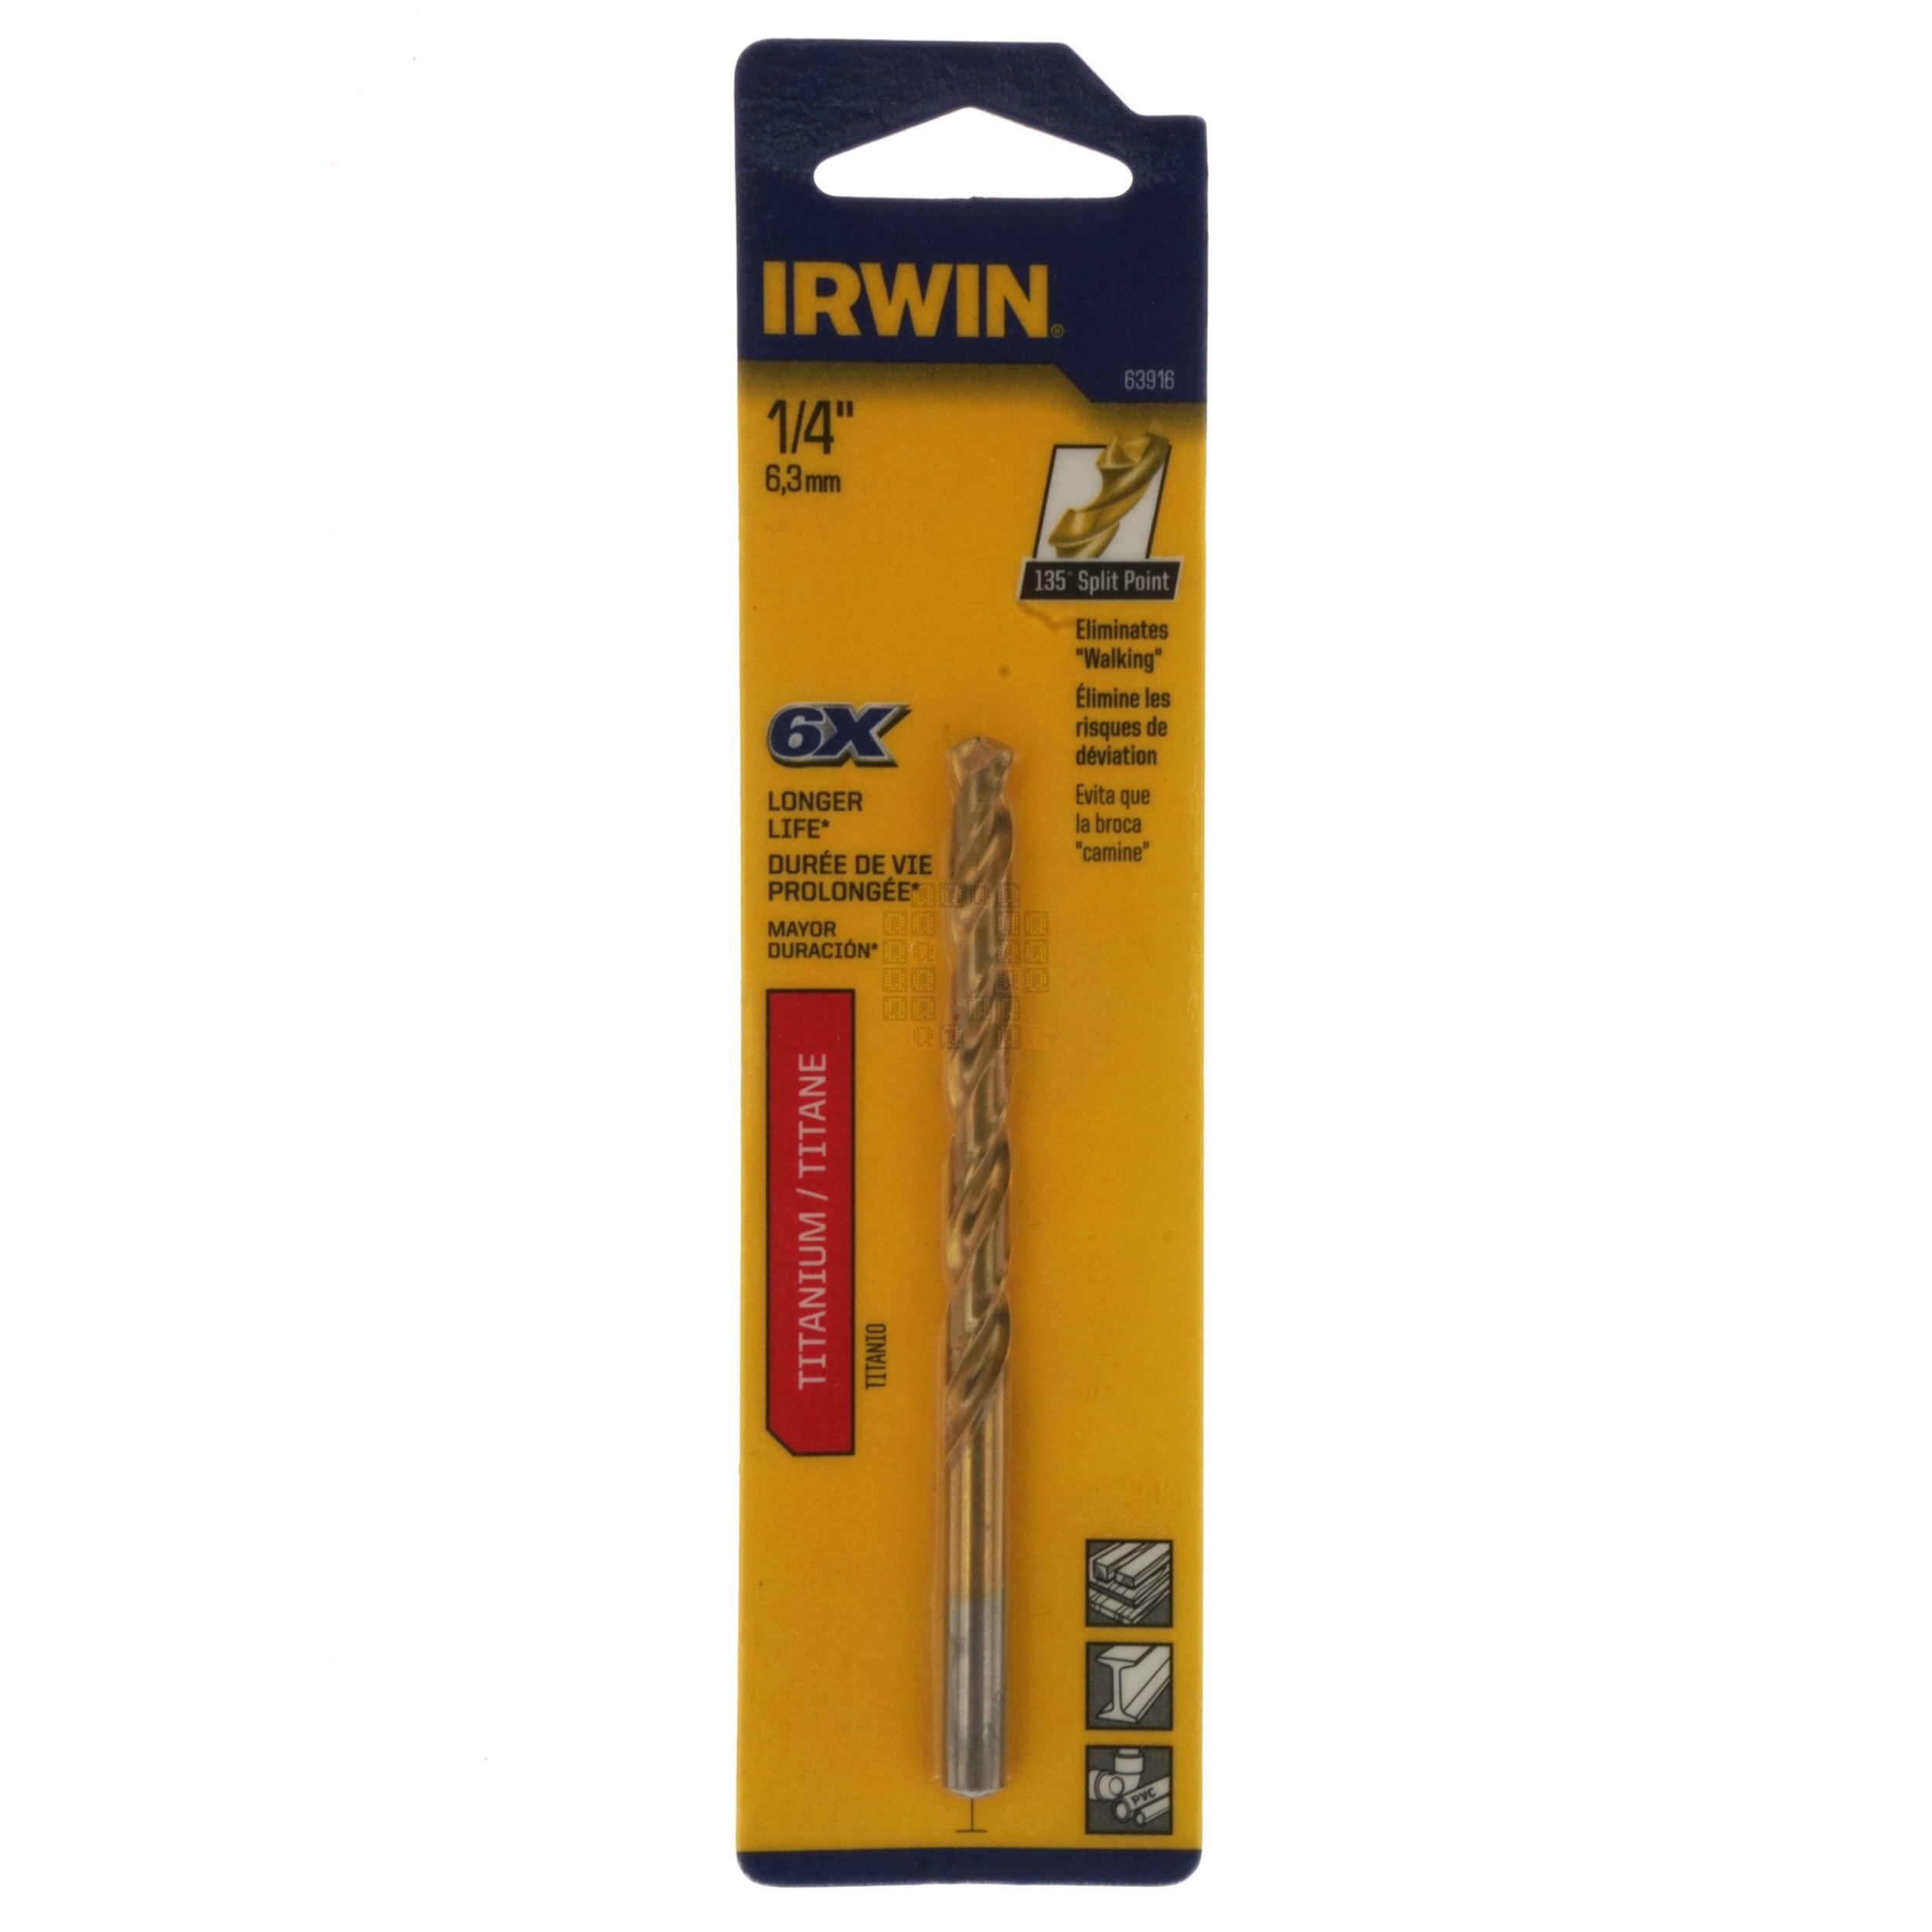 Irwin 63916 1/4" Titanium Nitride Coated 135° Split Point Drill Bit